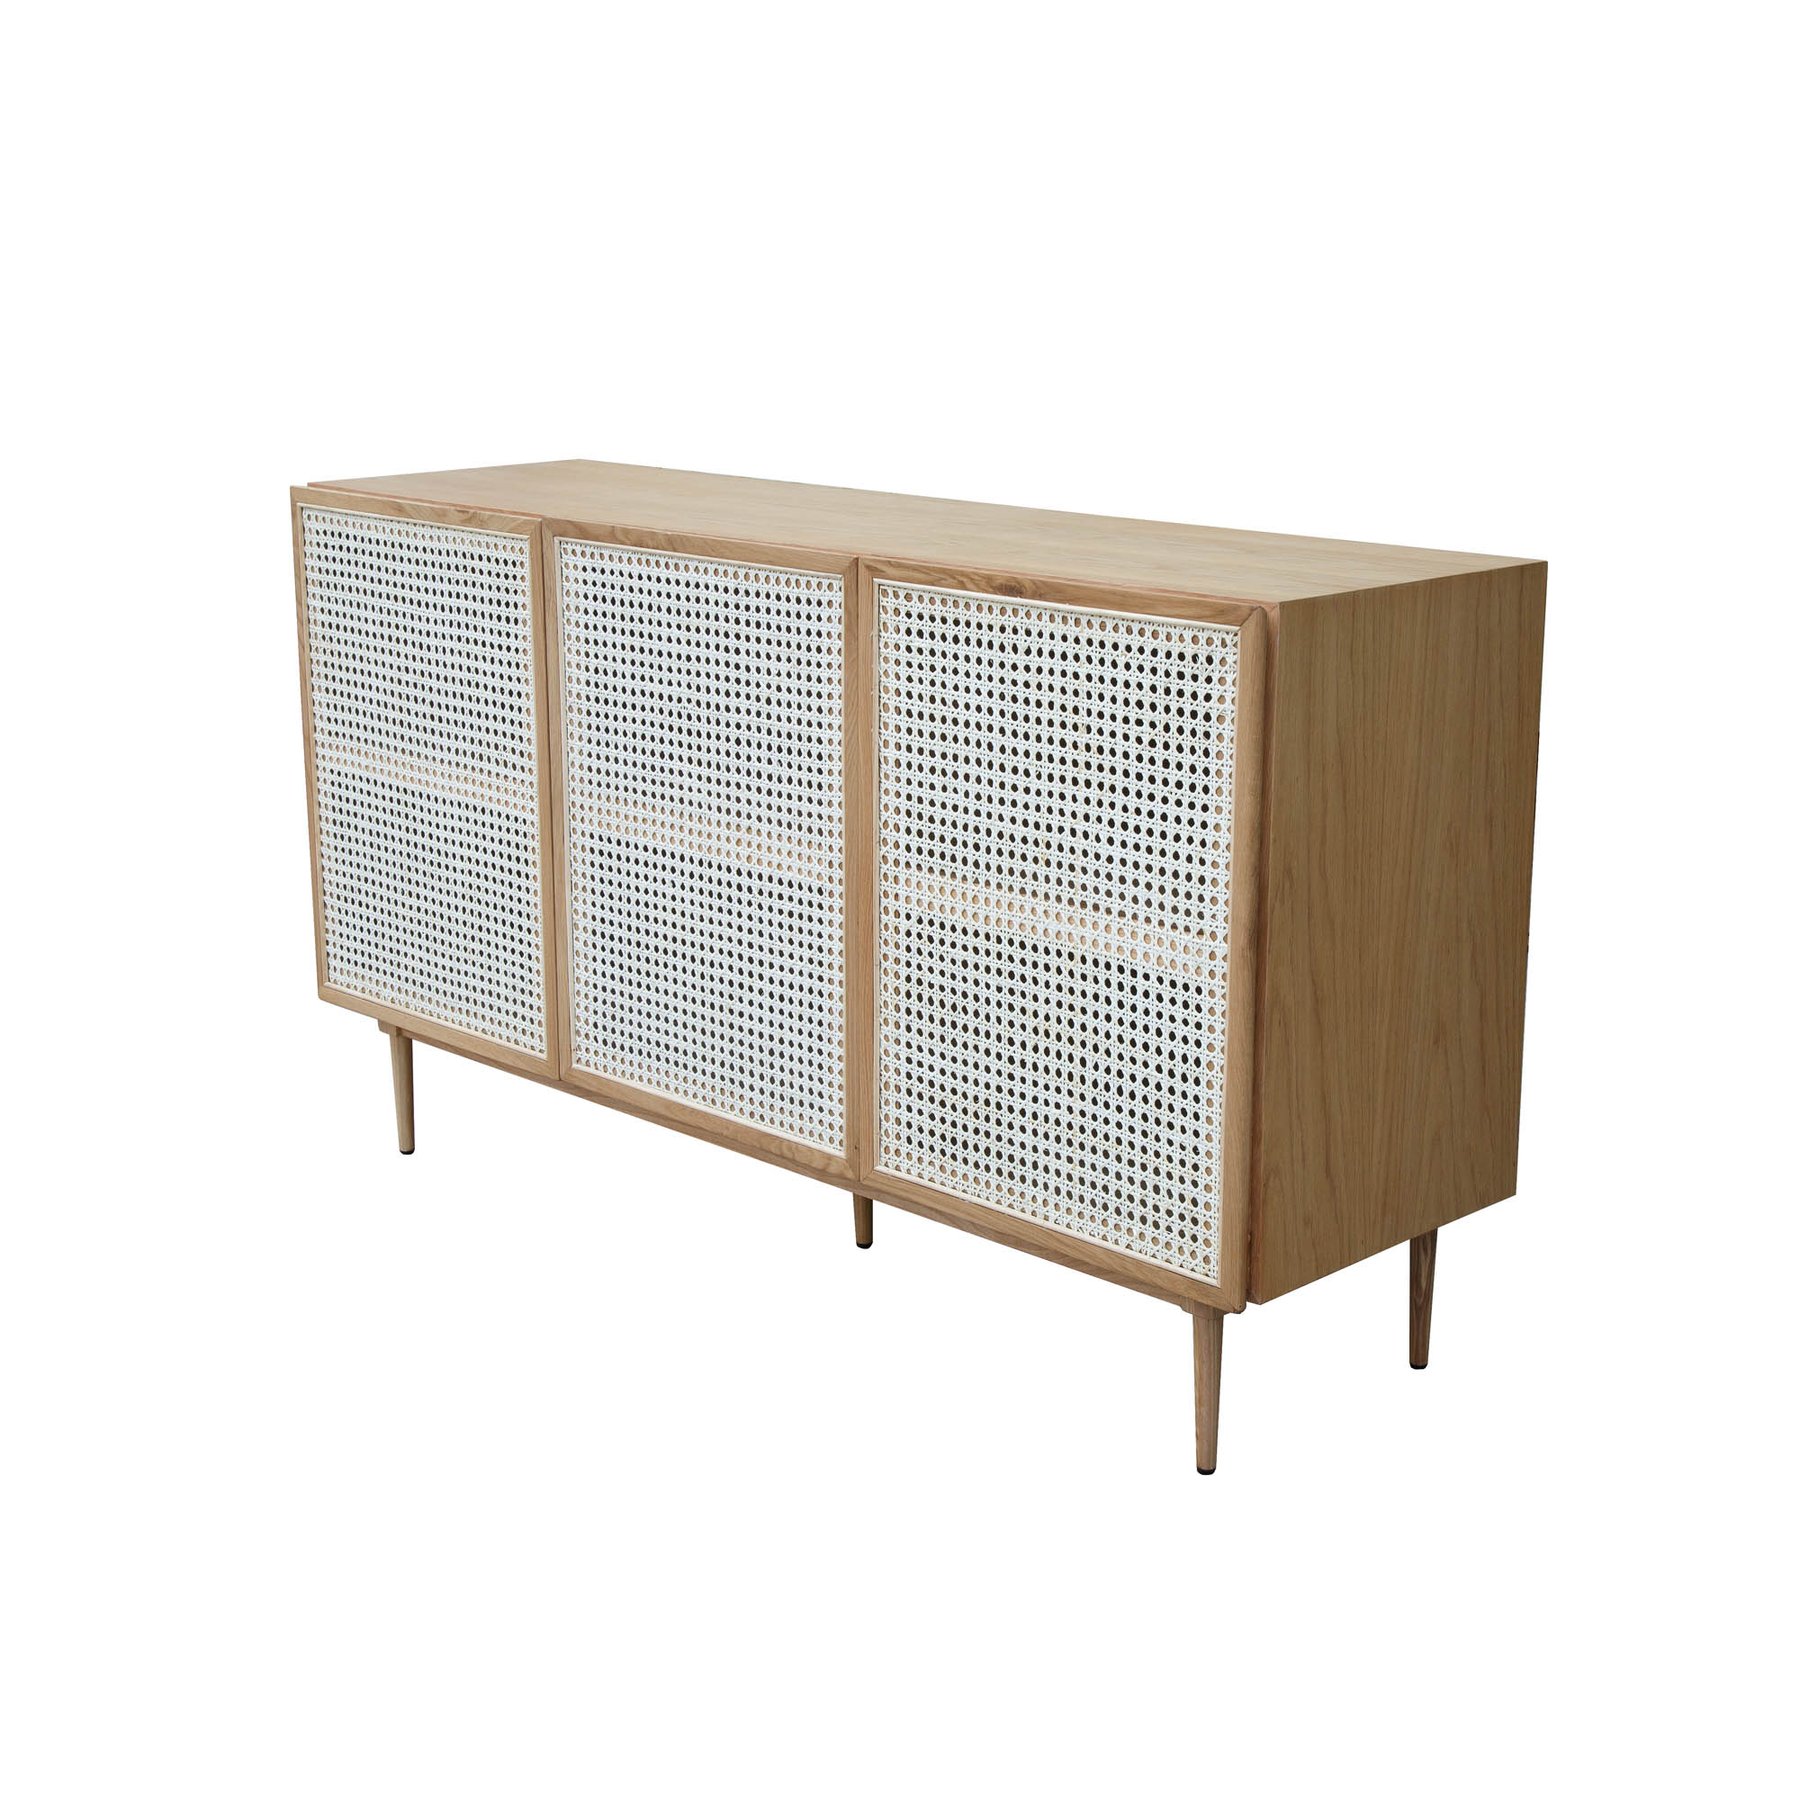 Cane Sideboard, Natural, Q-Living Furniture